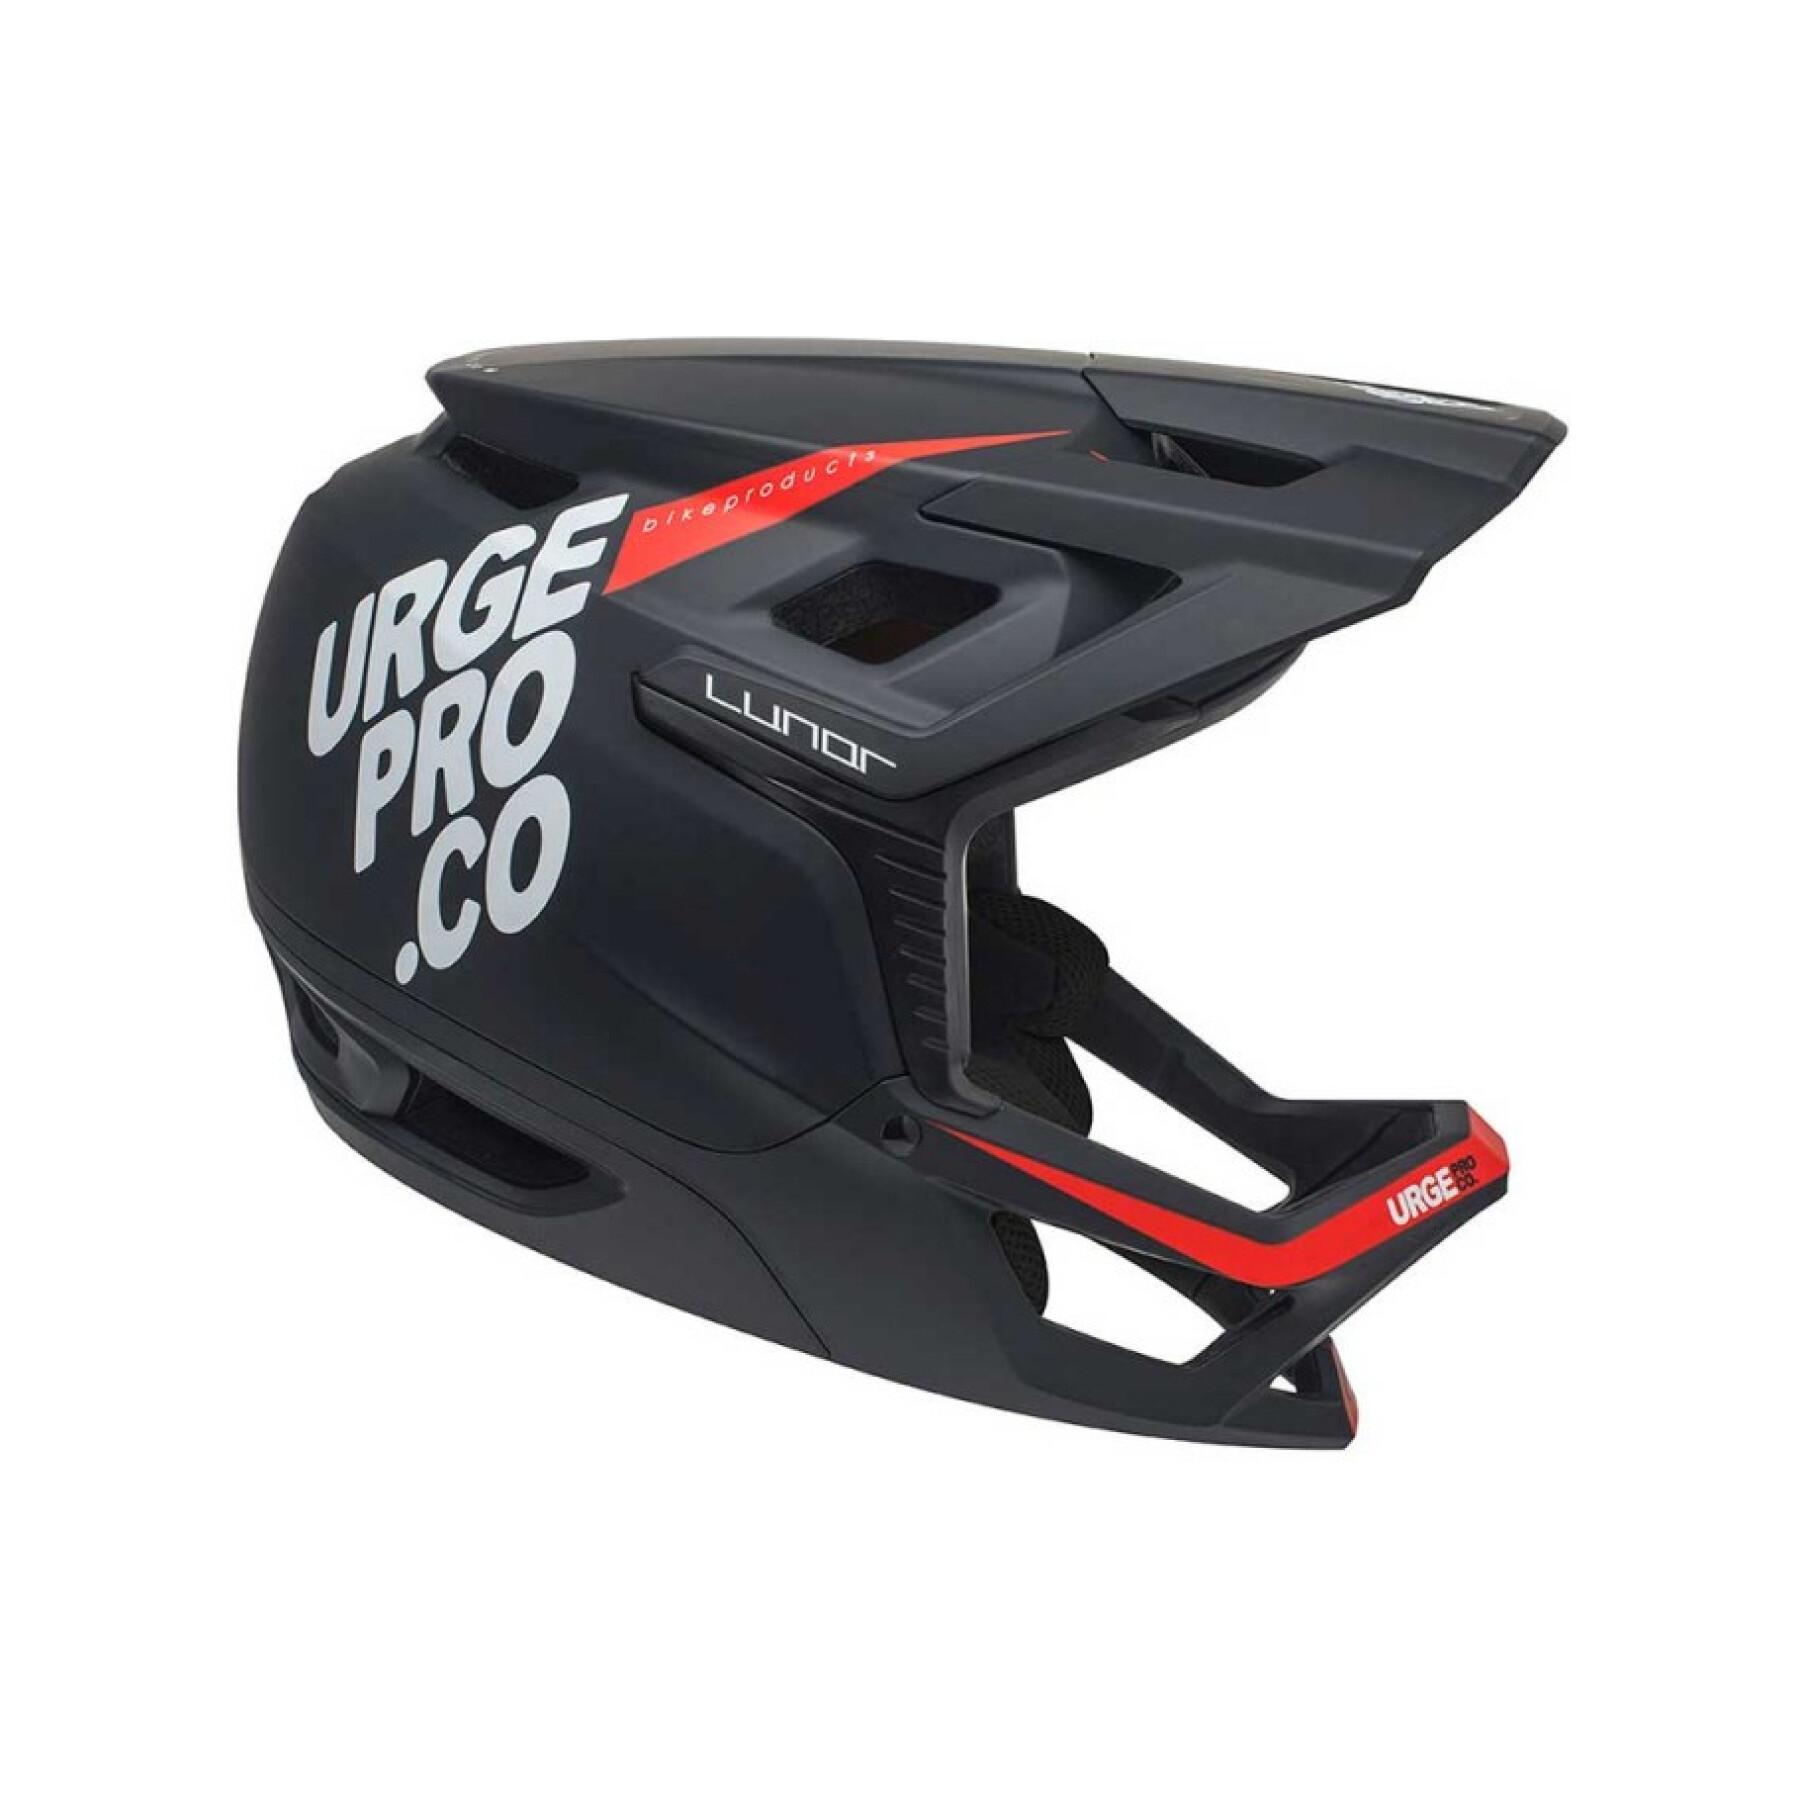 Full-face bike helmet Urge Lunar